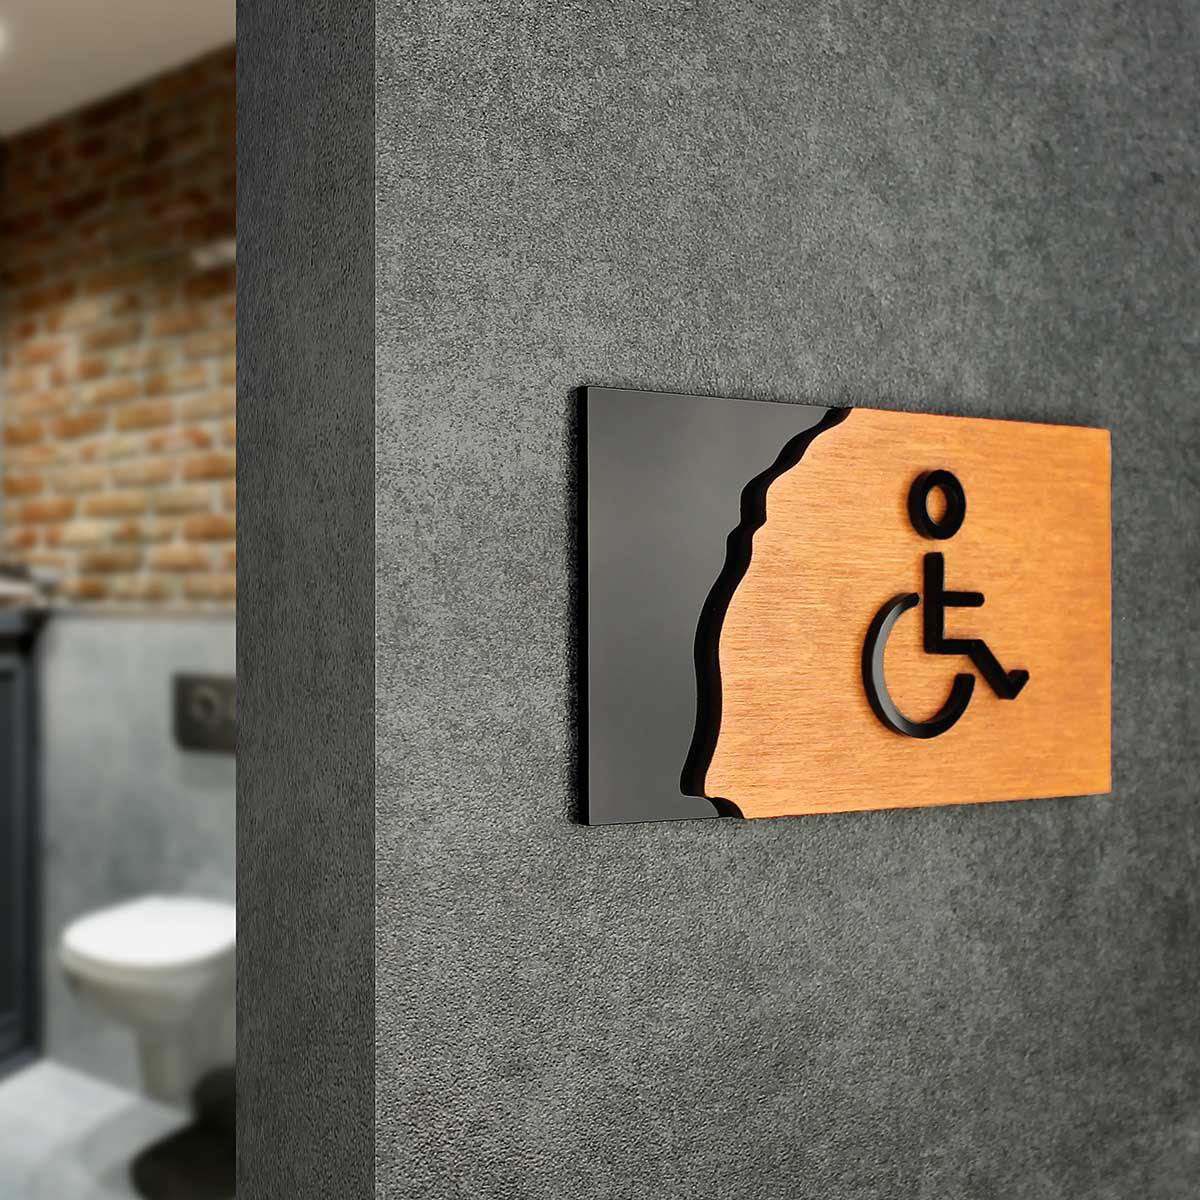 Women Lactation Room Sign - "Sherwood" Design